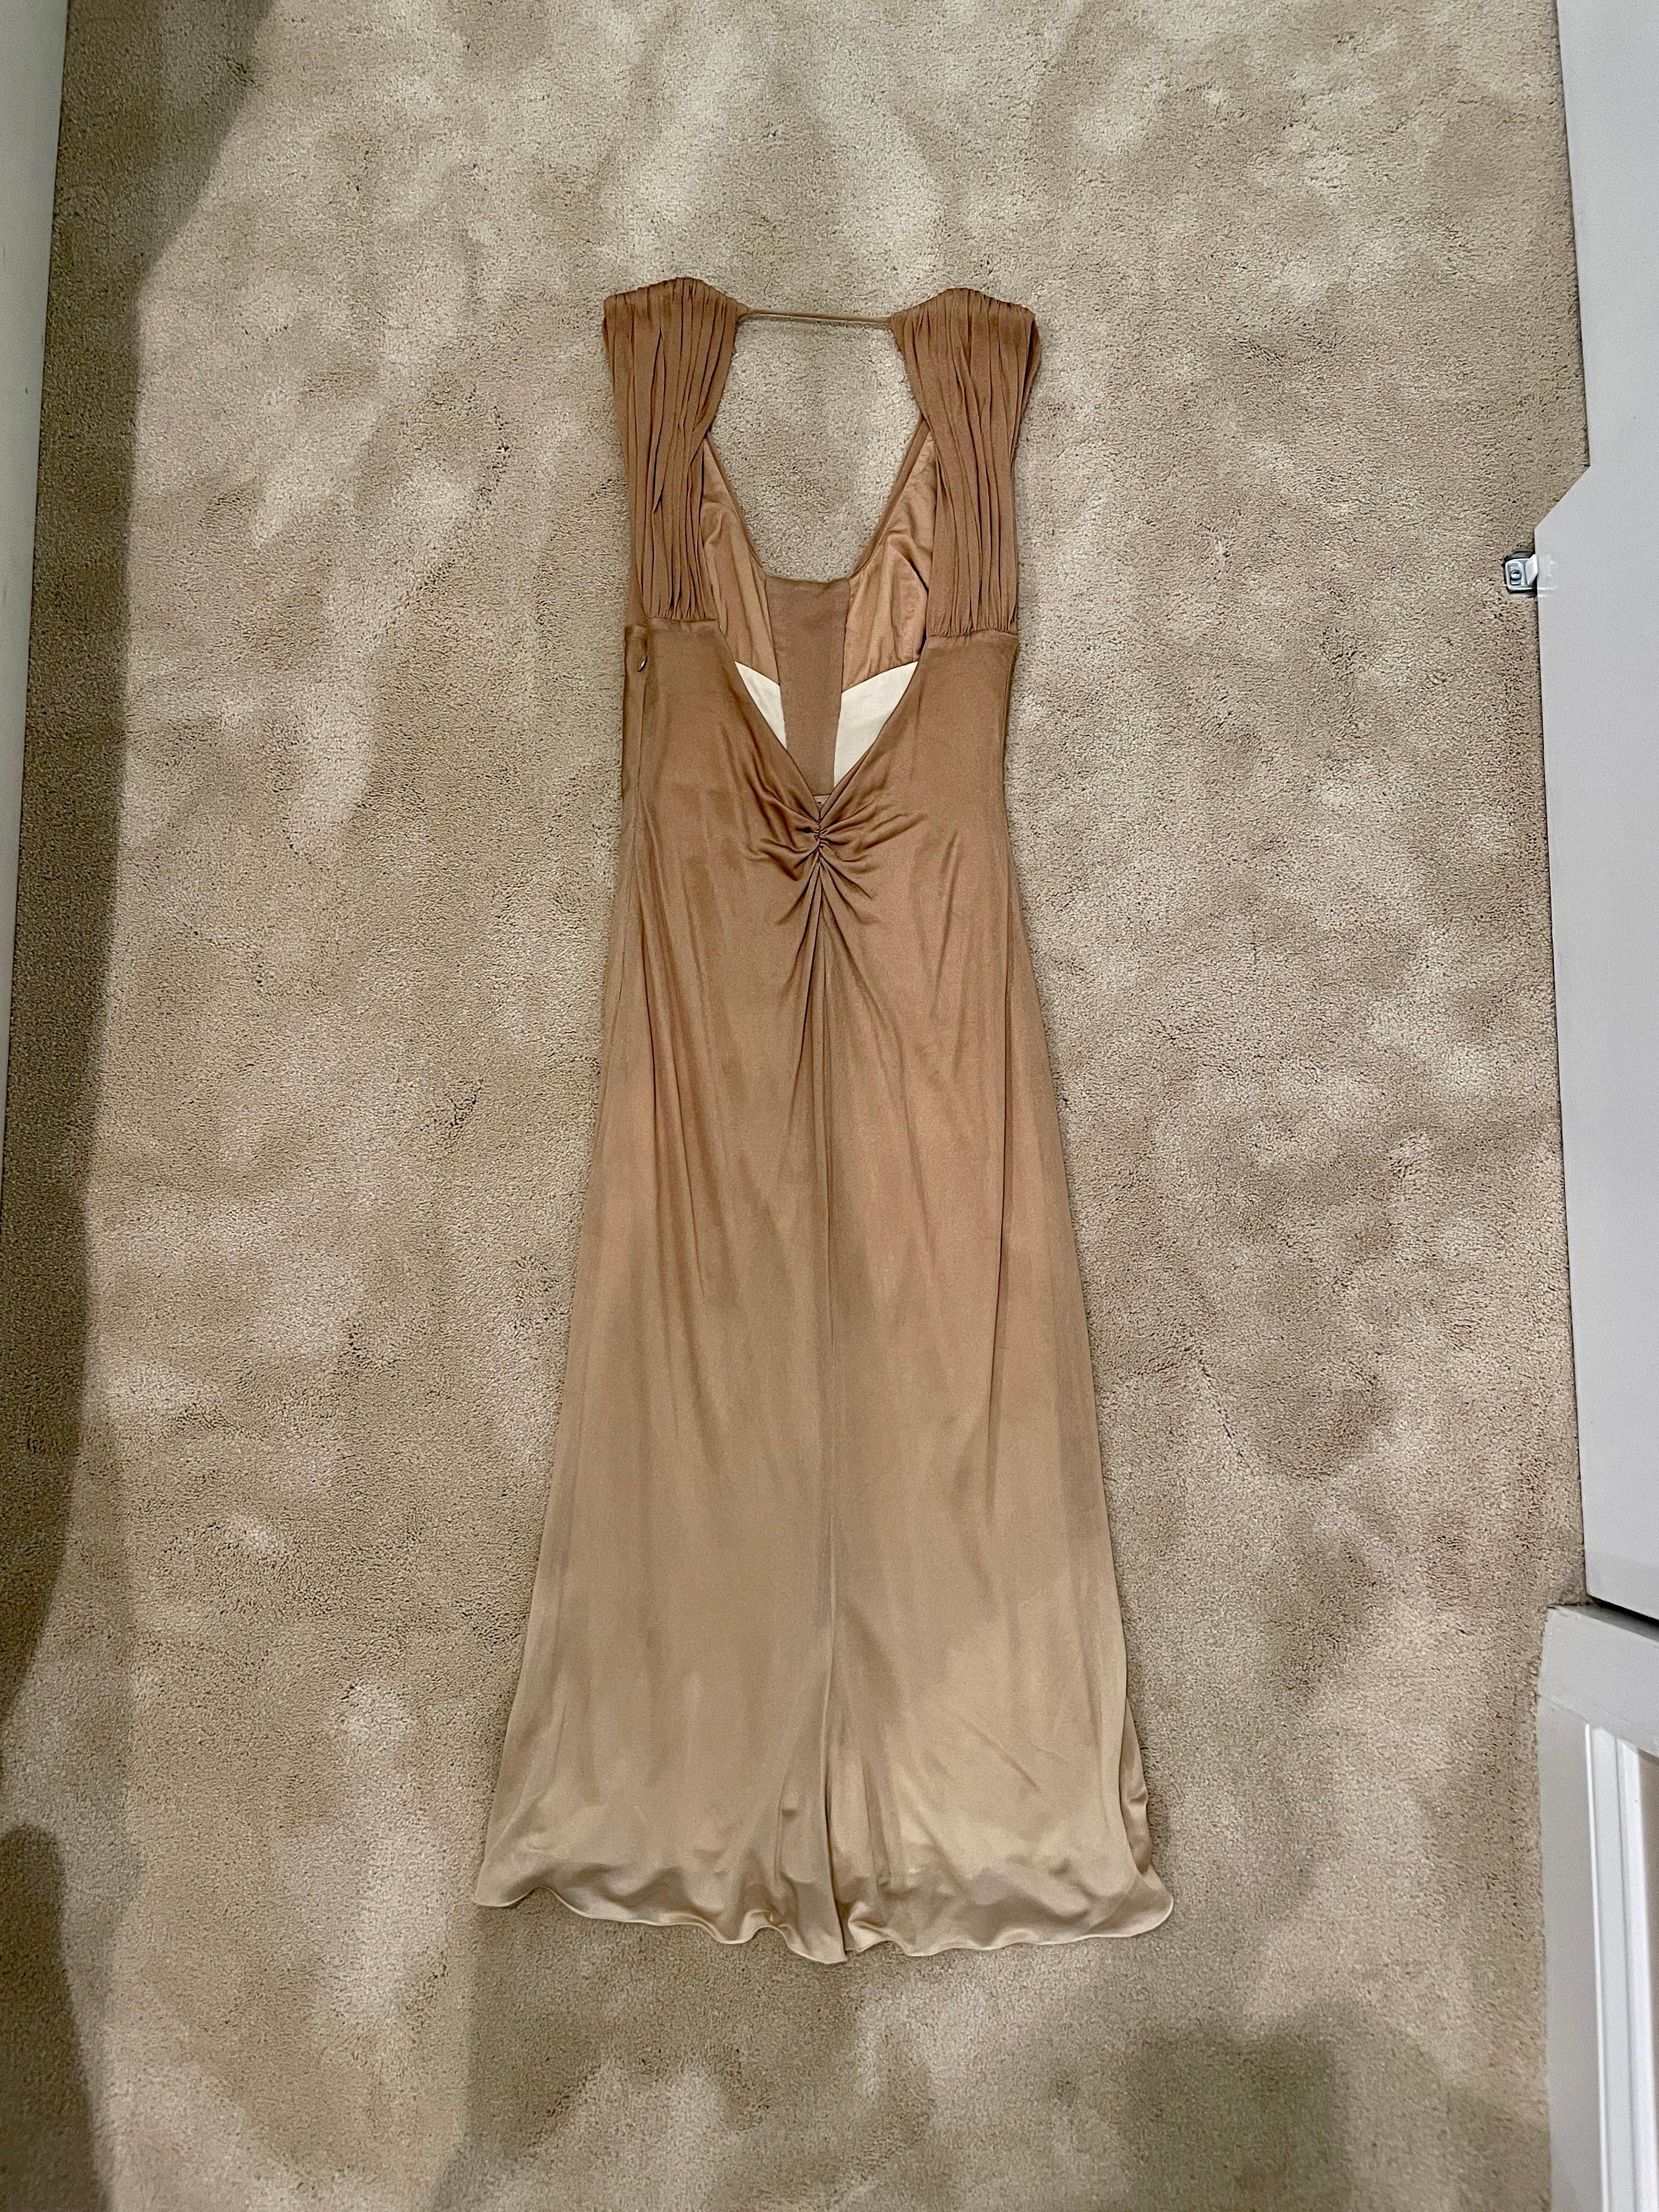 VERSACE SS06 vintage 2006 100% silk runway dress ombre 1